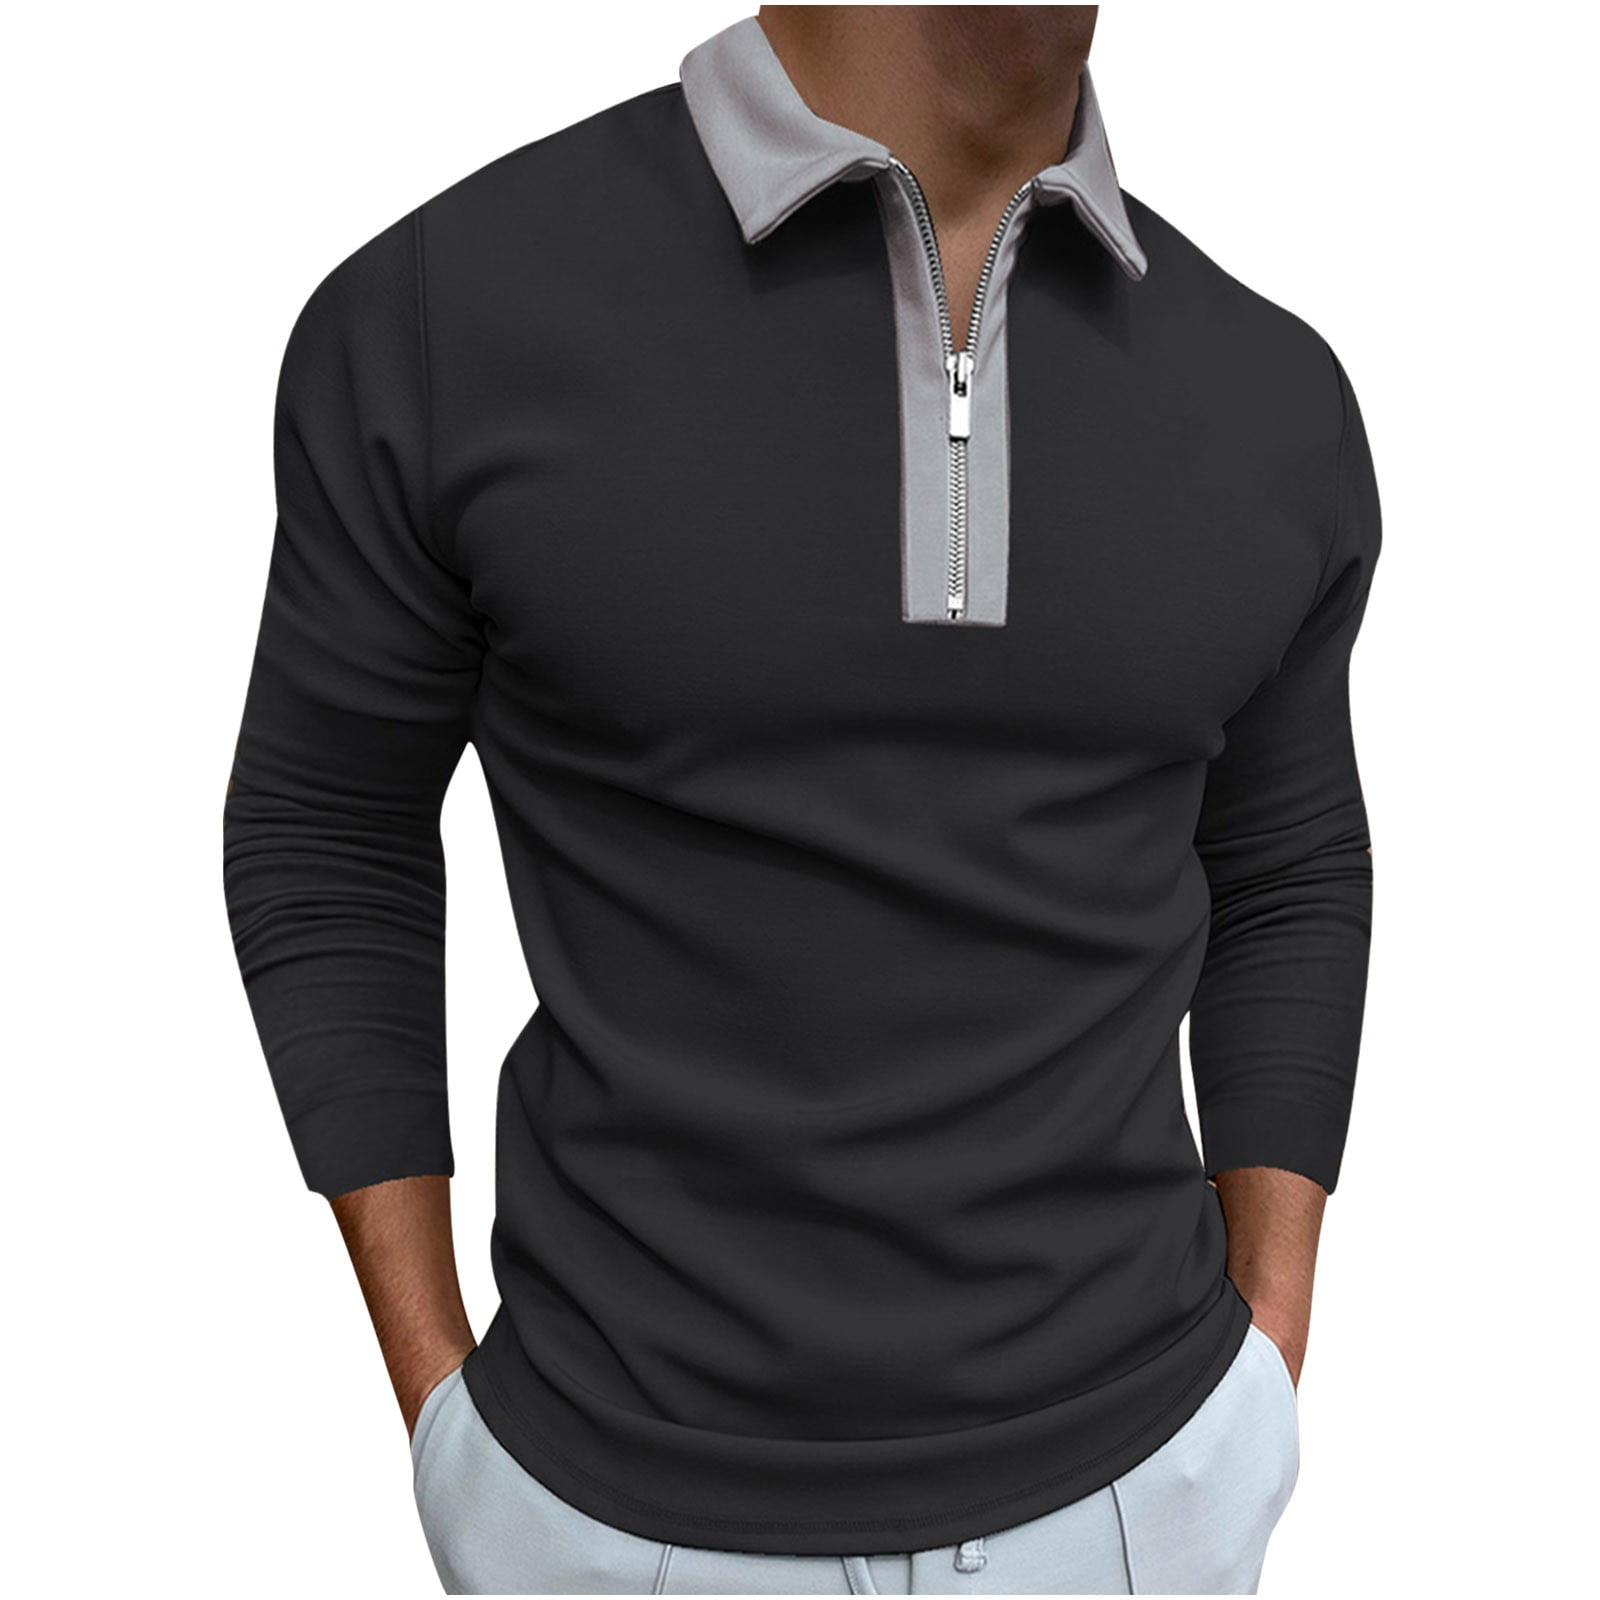 Henpk Long Sleeve Shirts for Men Men'S Shirts Turn-Down Collar Zip Up ...